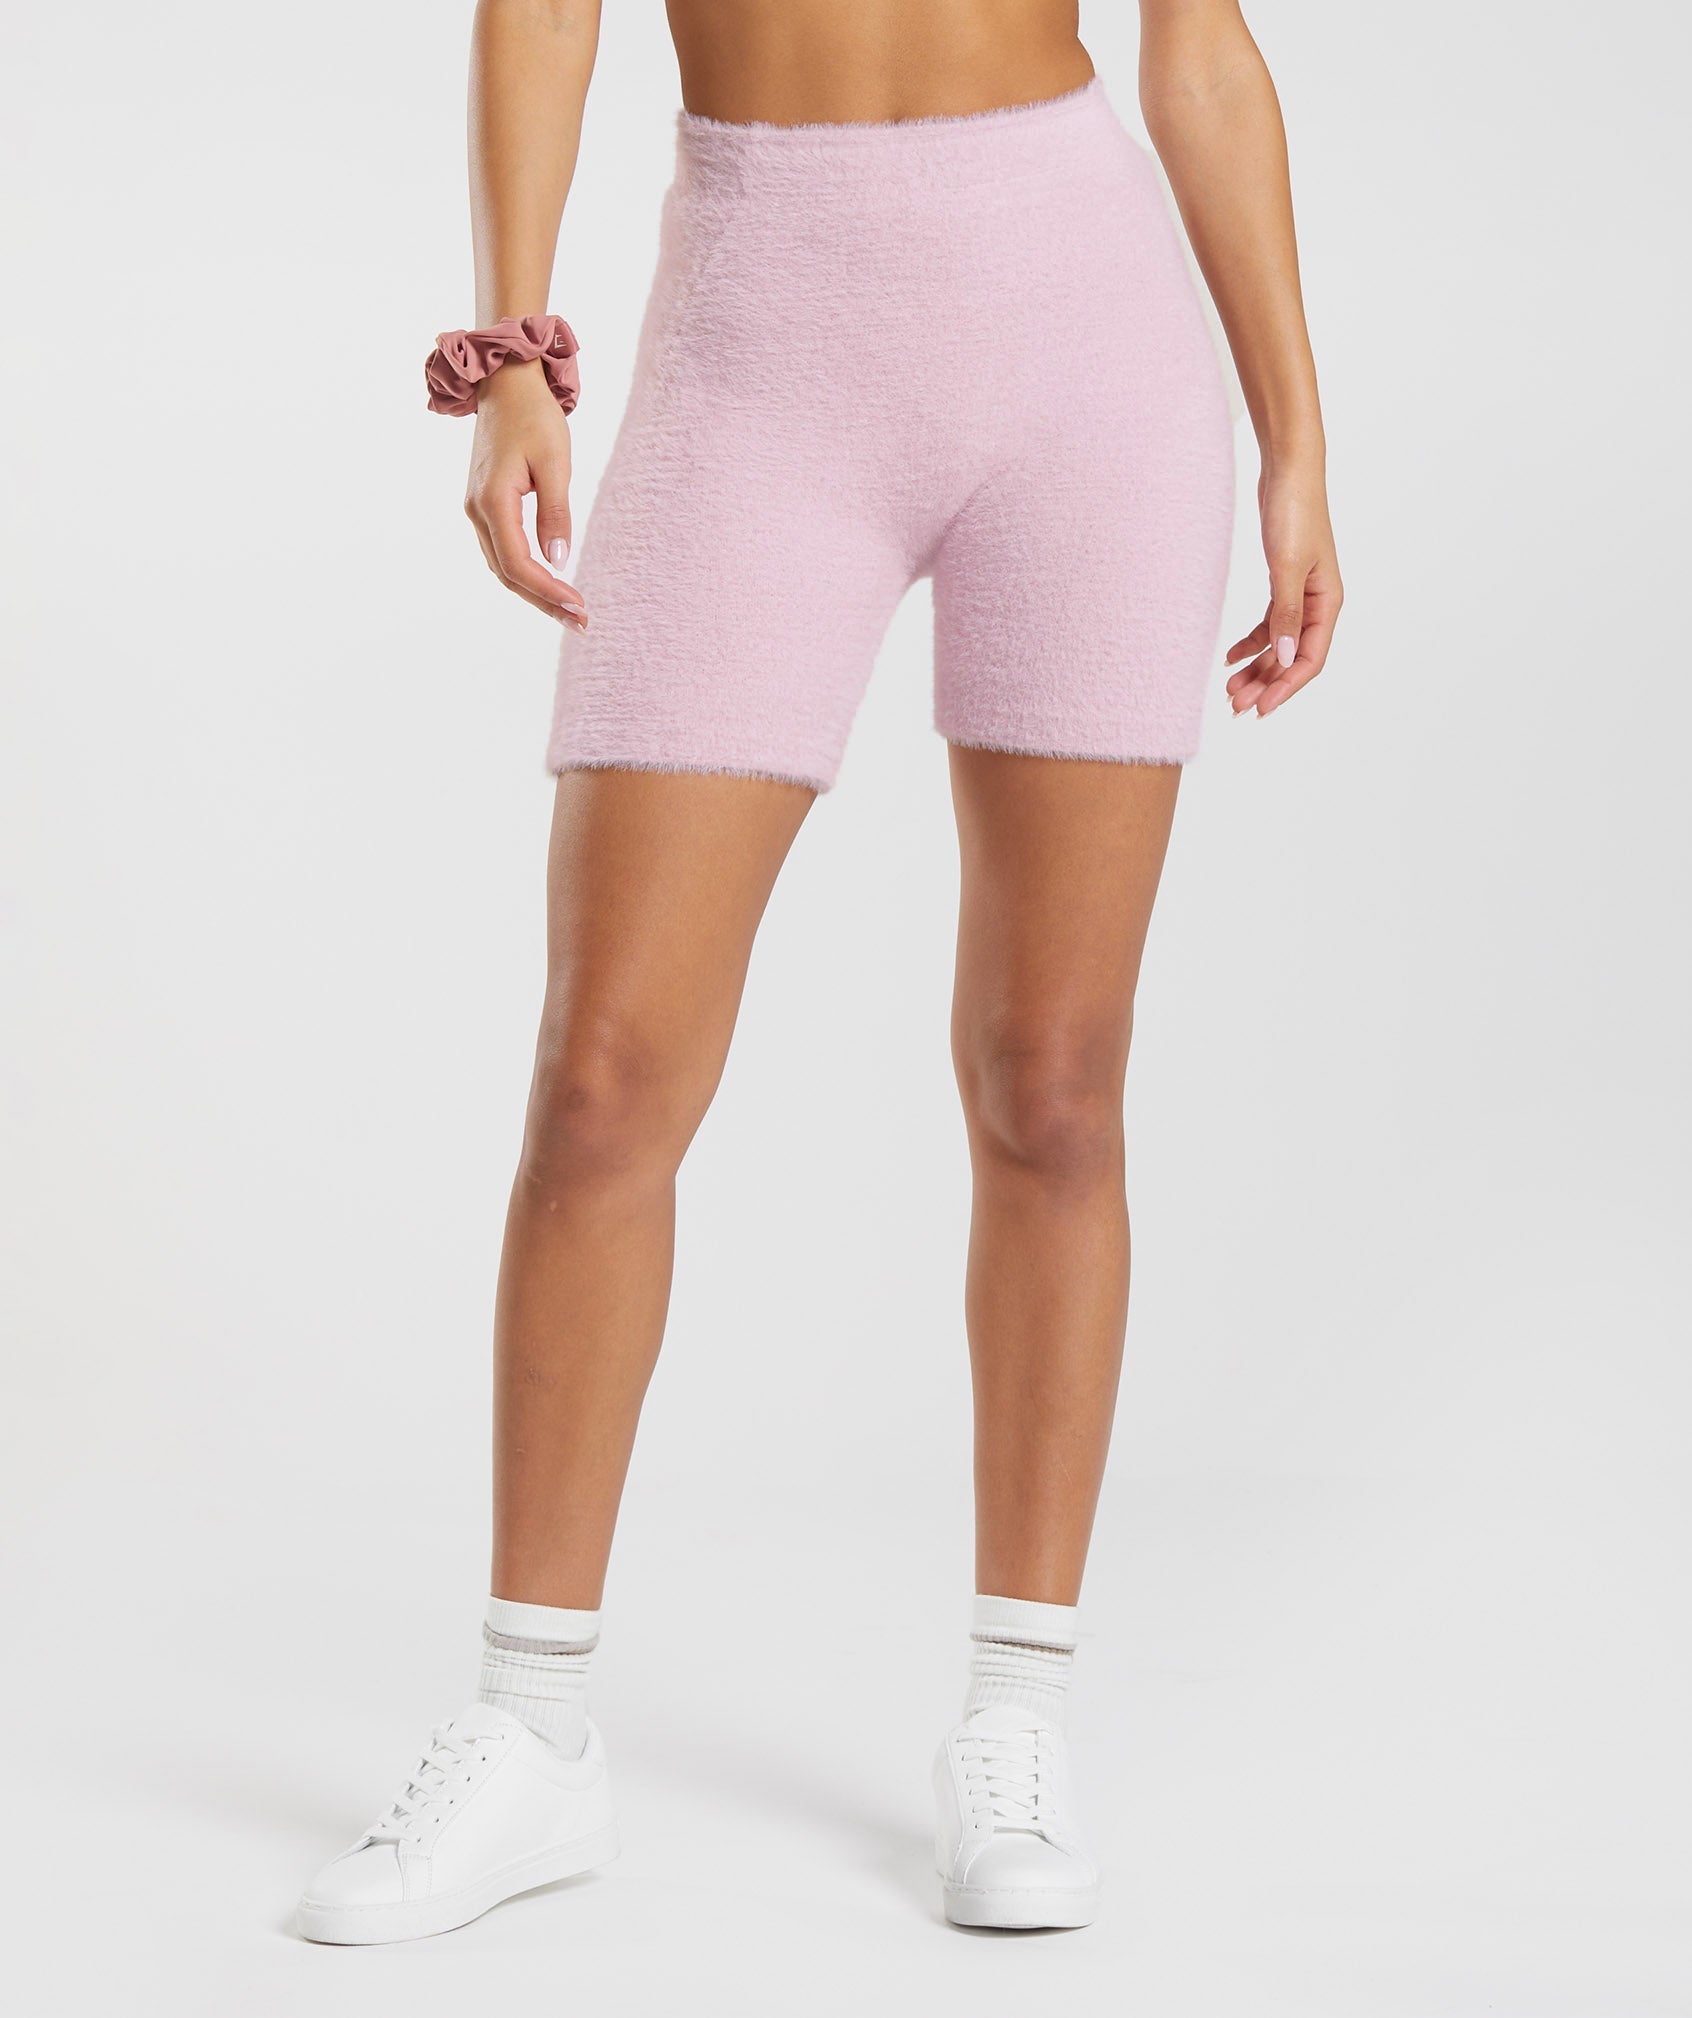 Whitney Eyelash Knit Shorts in Pressed Petal Pink - view 1